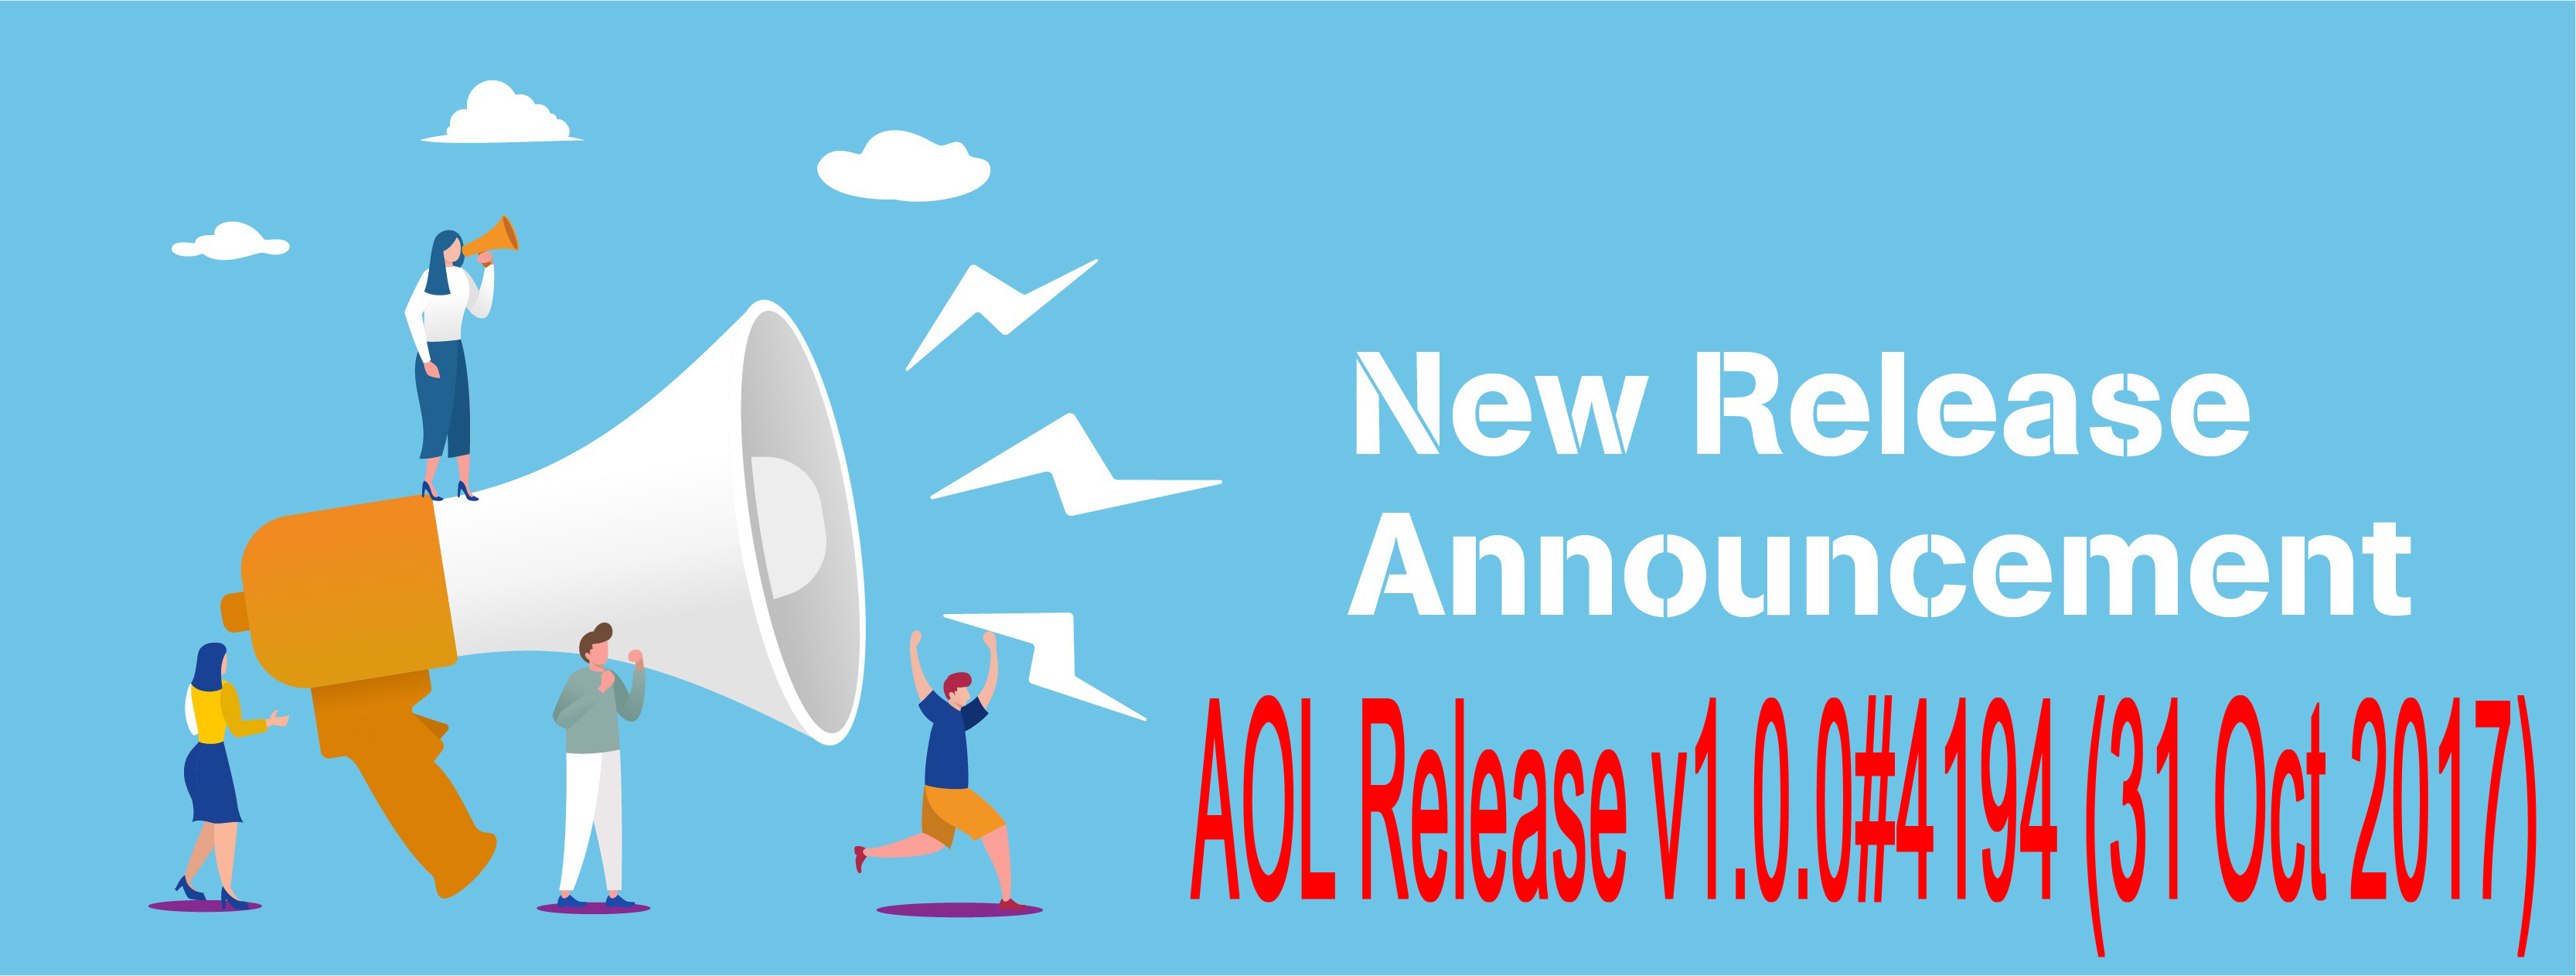 Release v1.0.0#4194 (31 Oct 2017)